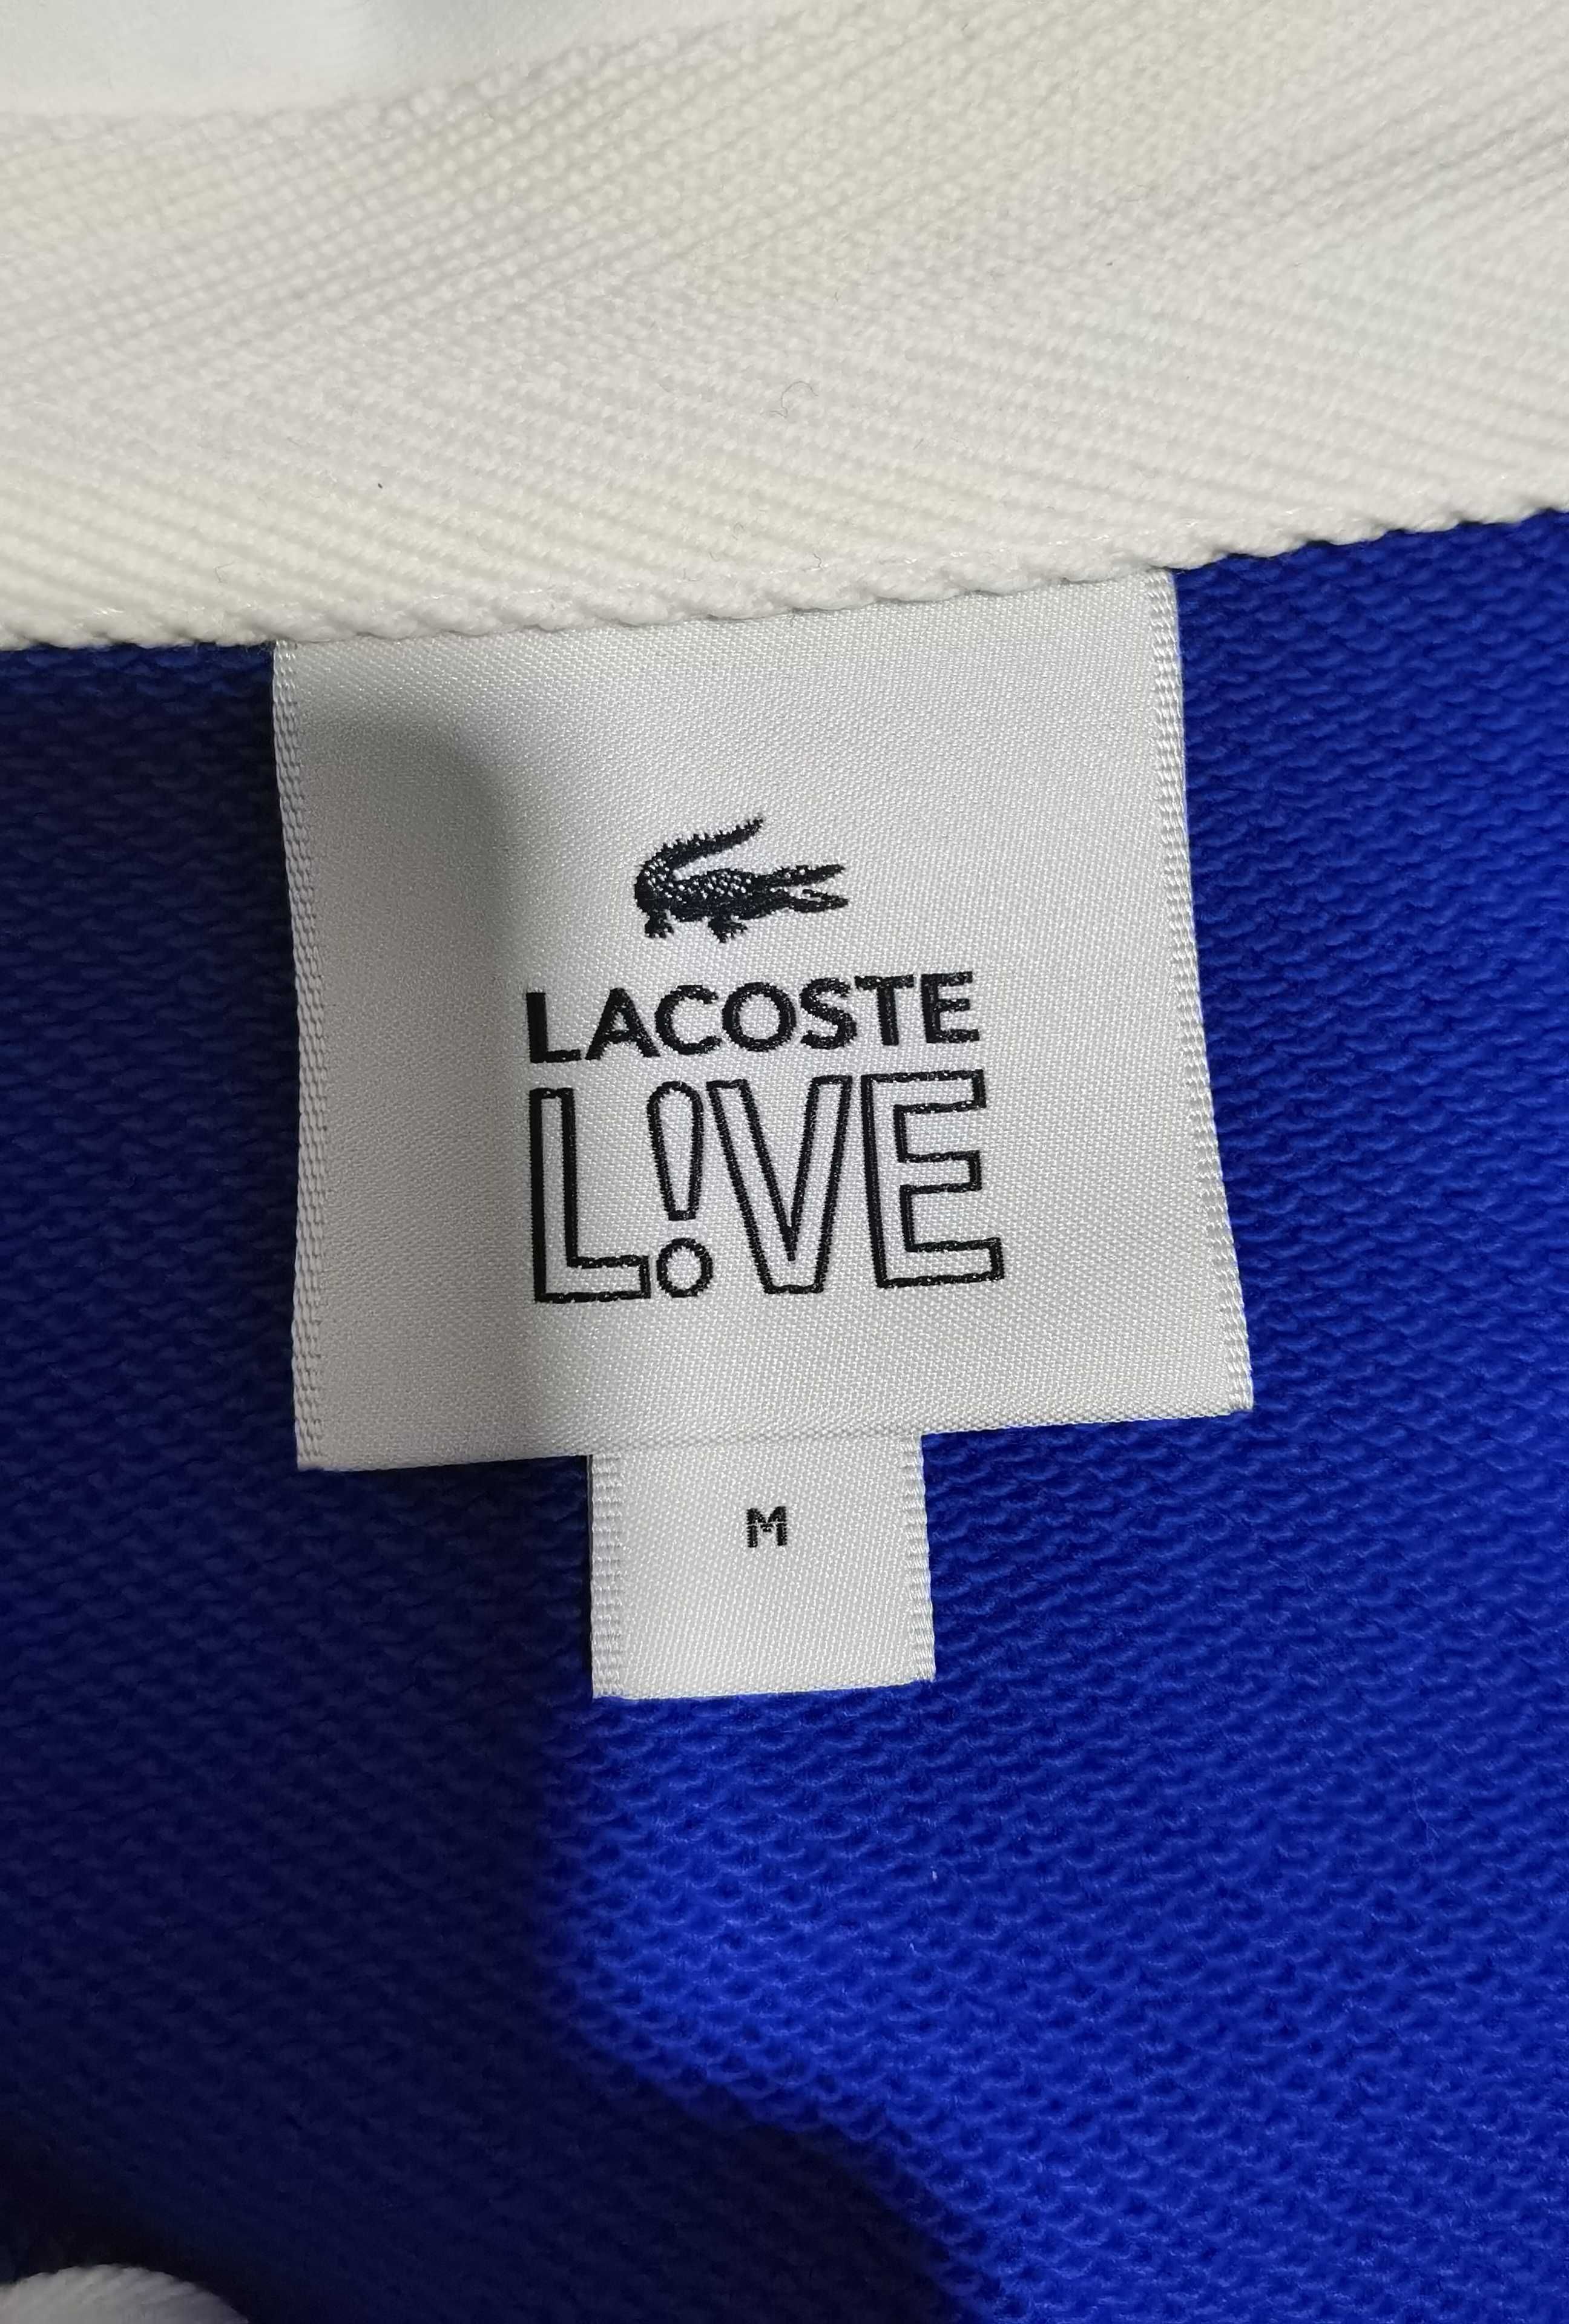 LACOSTE Men’s LIVE Colourblock Fleece Polo Shirt Sweatshirt